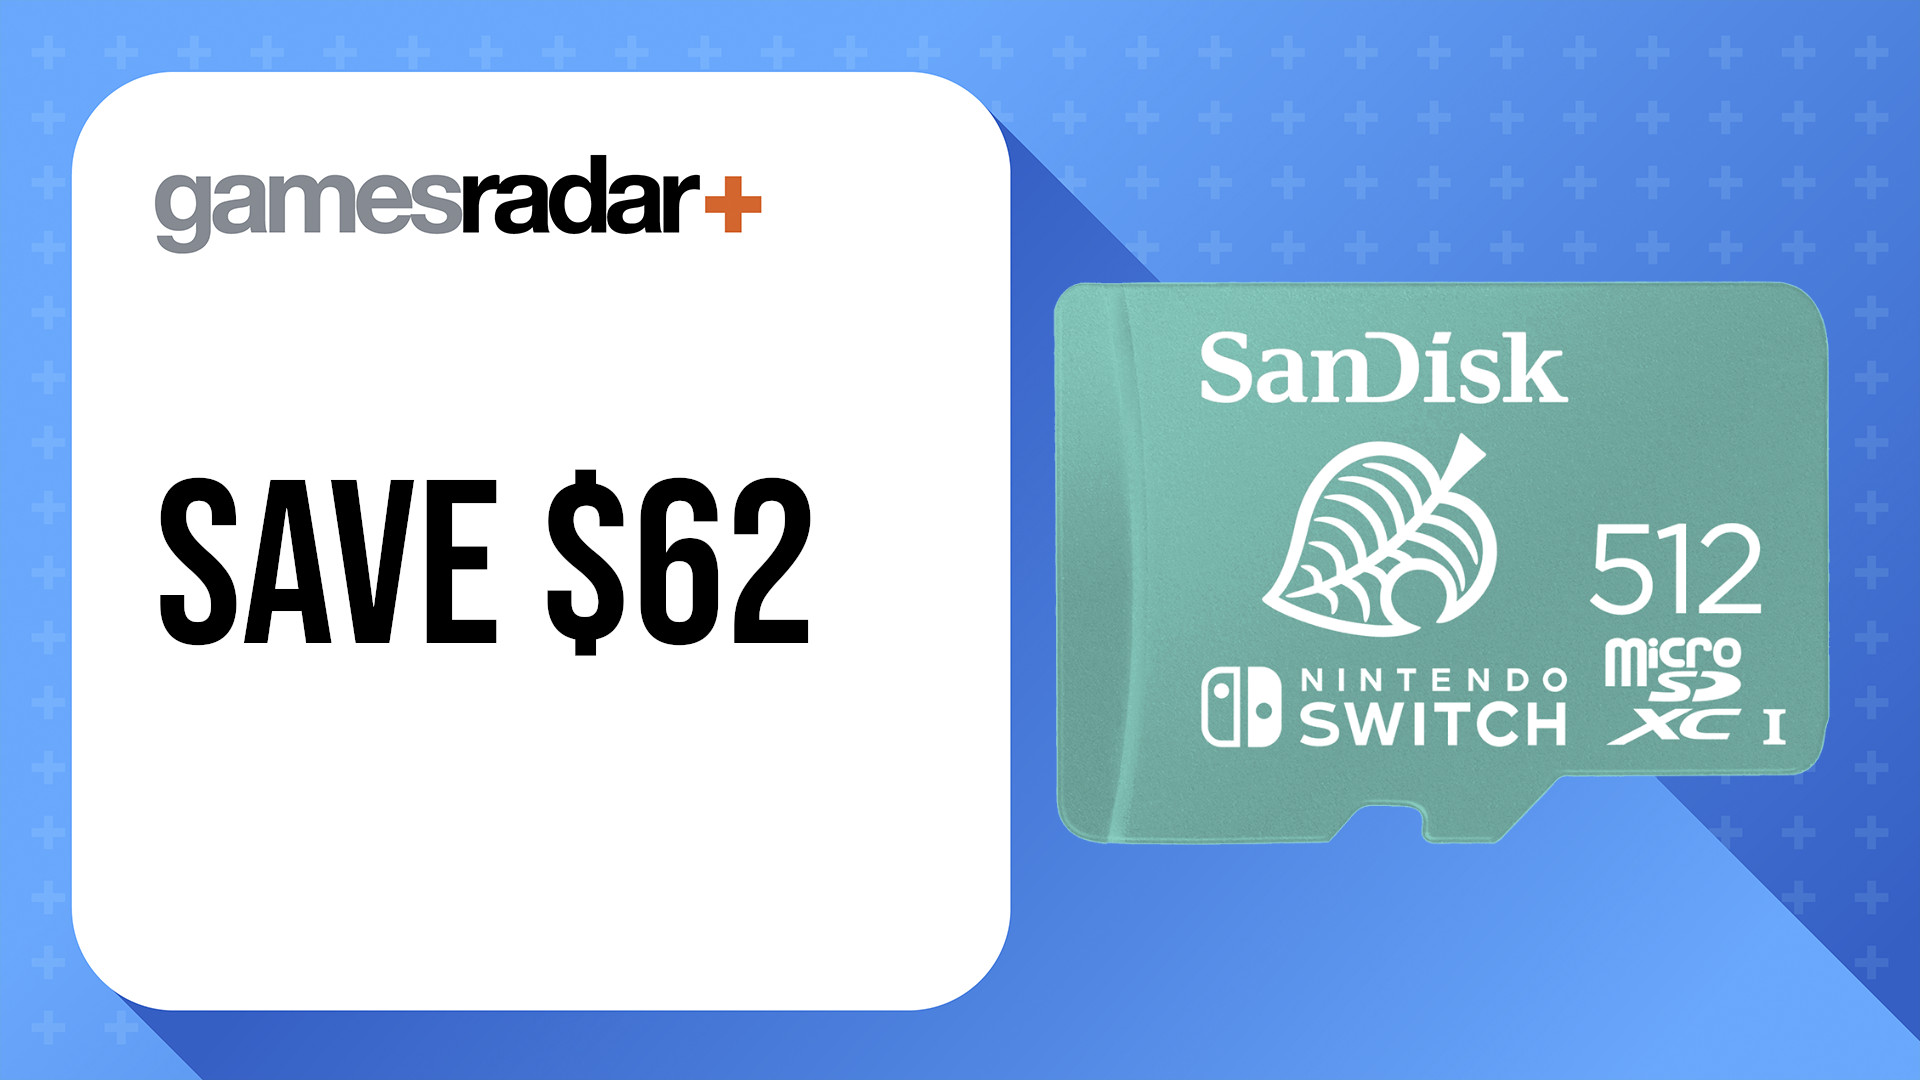 Nintendo Switch memory card deal